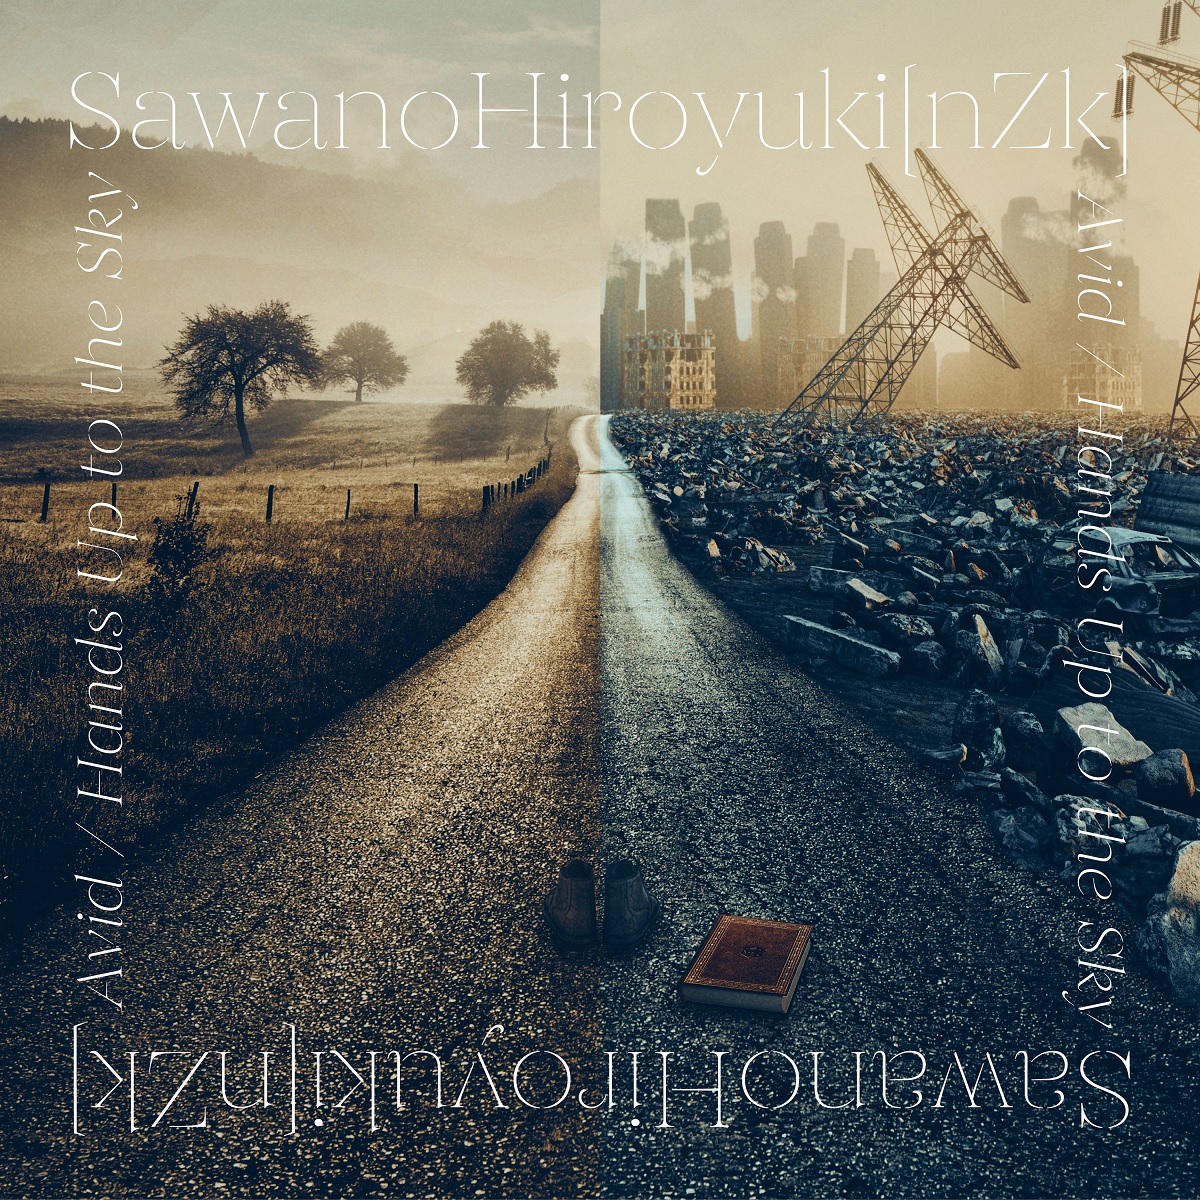 Cover art for『SawanoHiroyuki[nZk]:mizuki - Avid』from the release『Avid / Hands Up to the Sky』